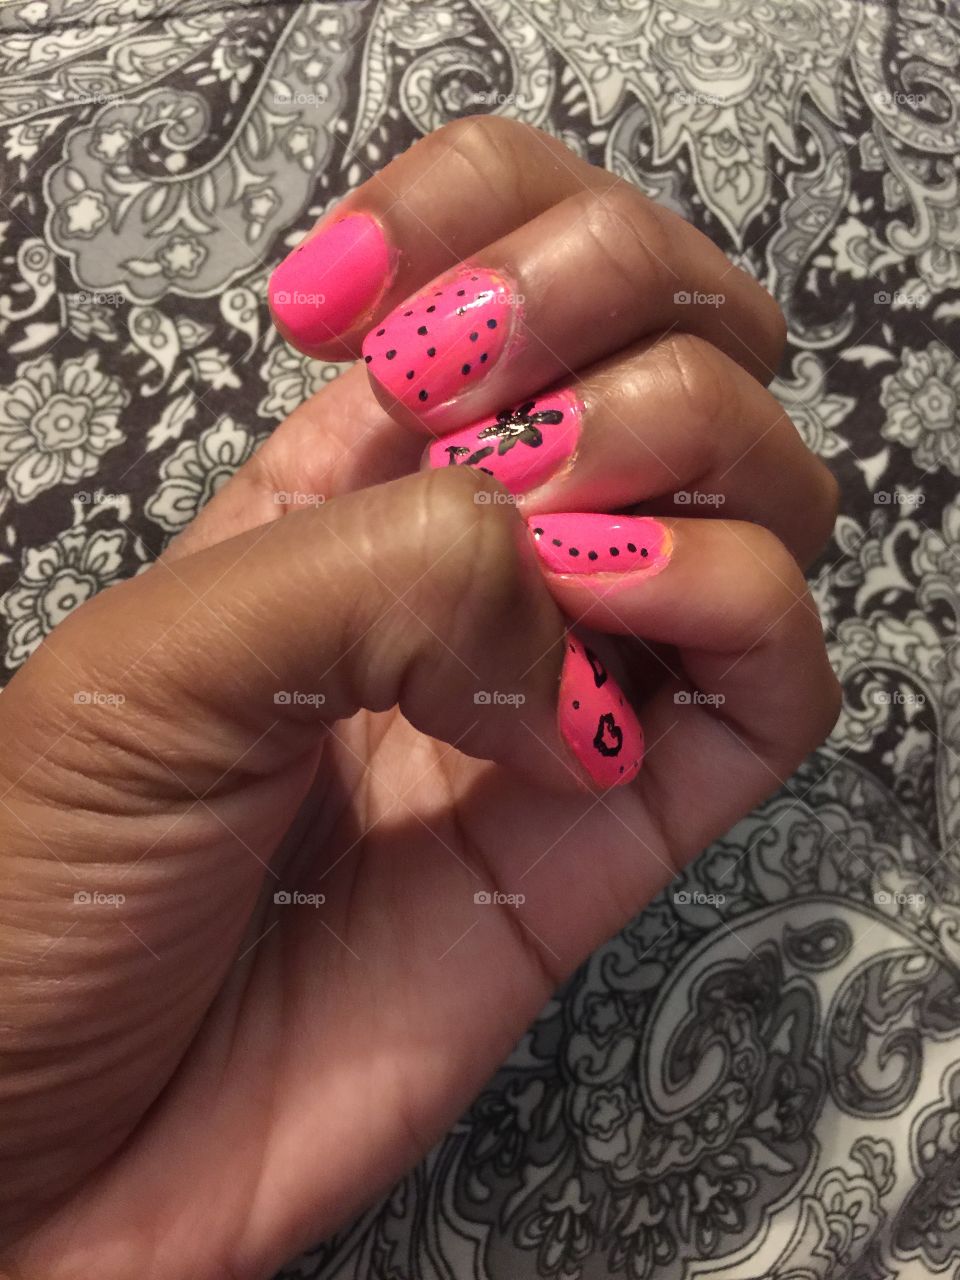 Polished nails